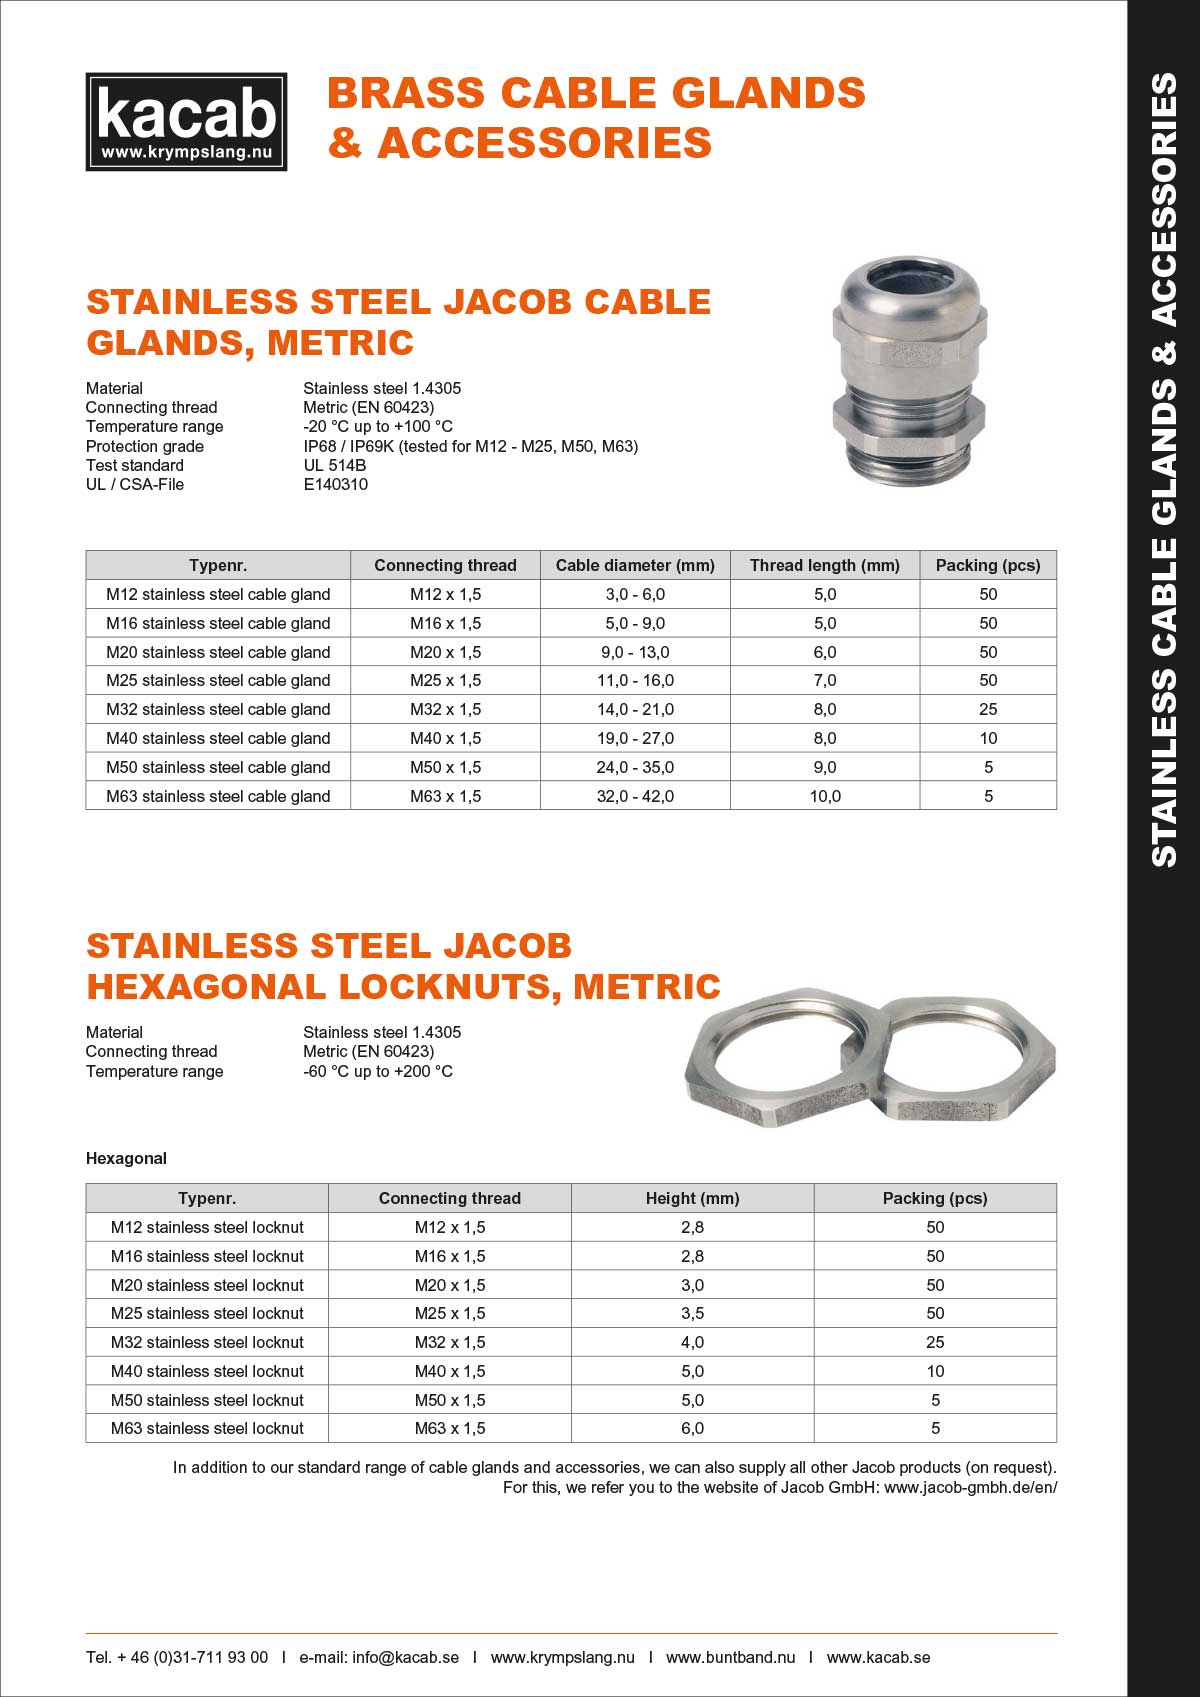 Stainless-steel-Jacob-hexagonal-locknuts-metric